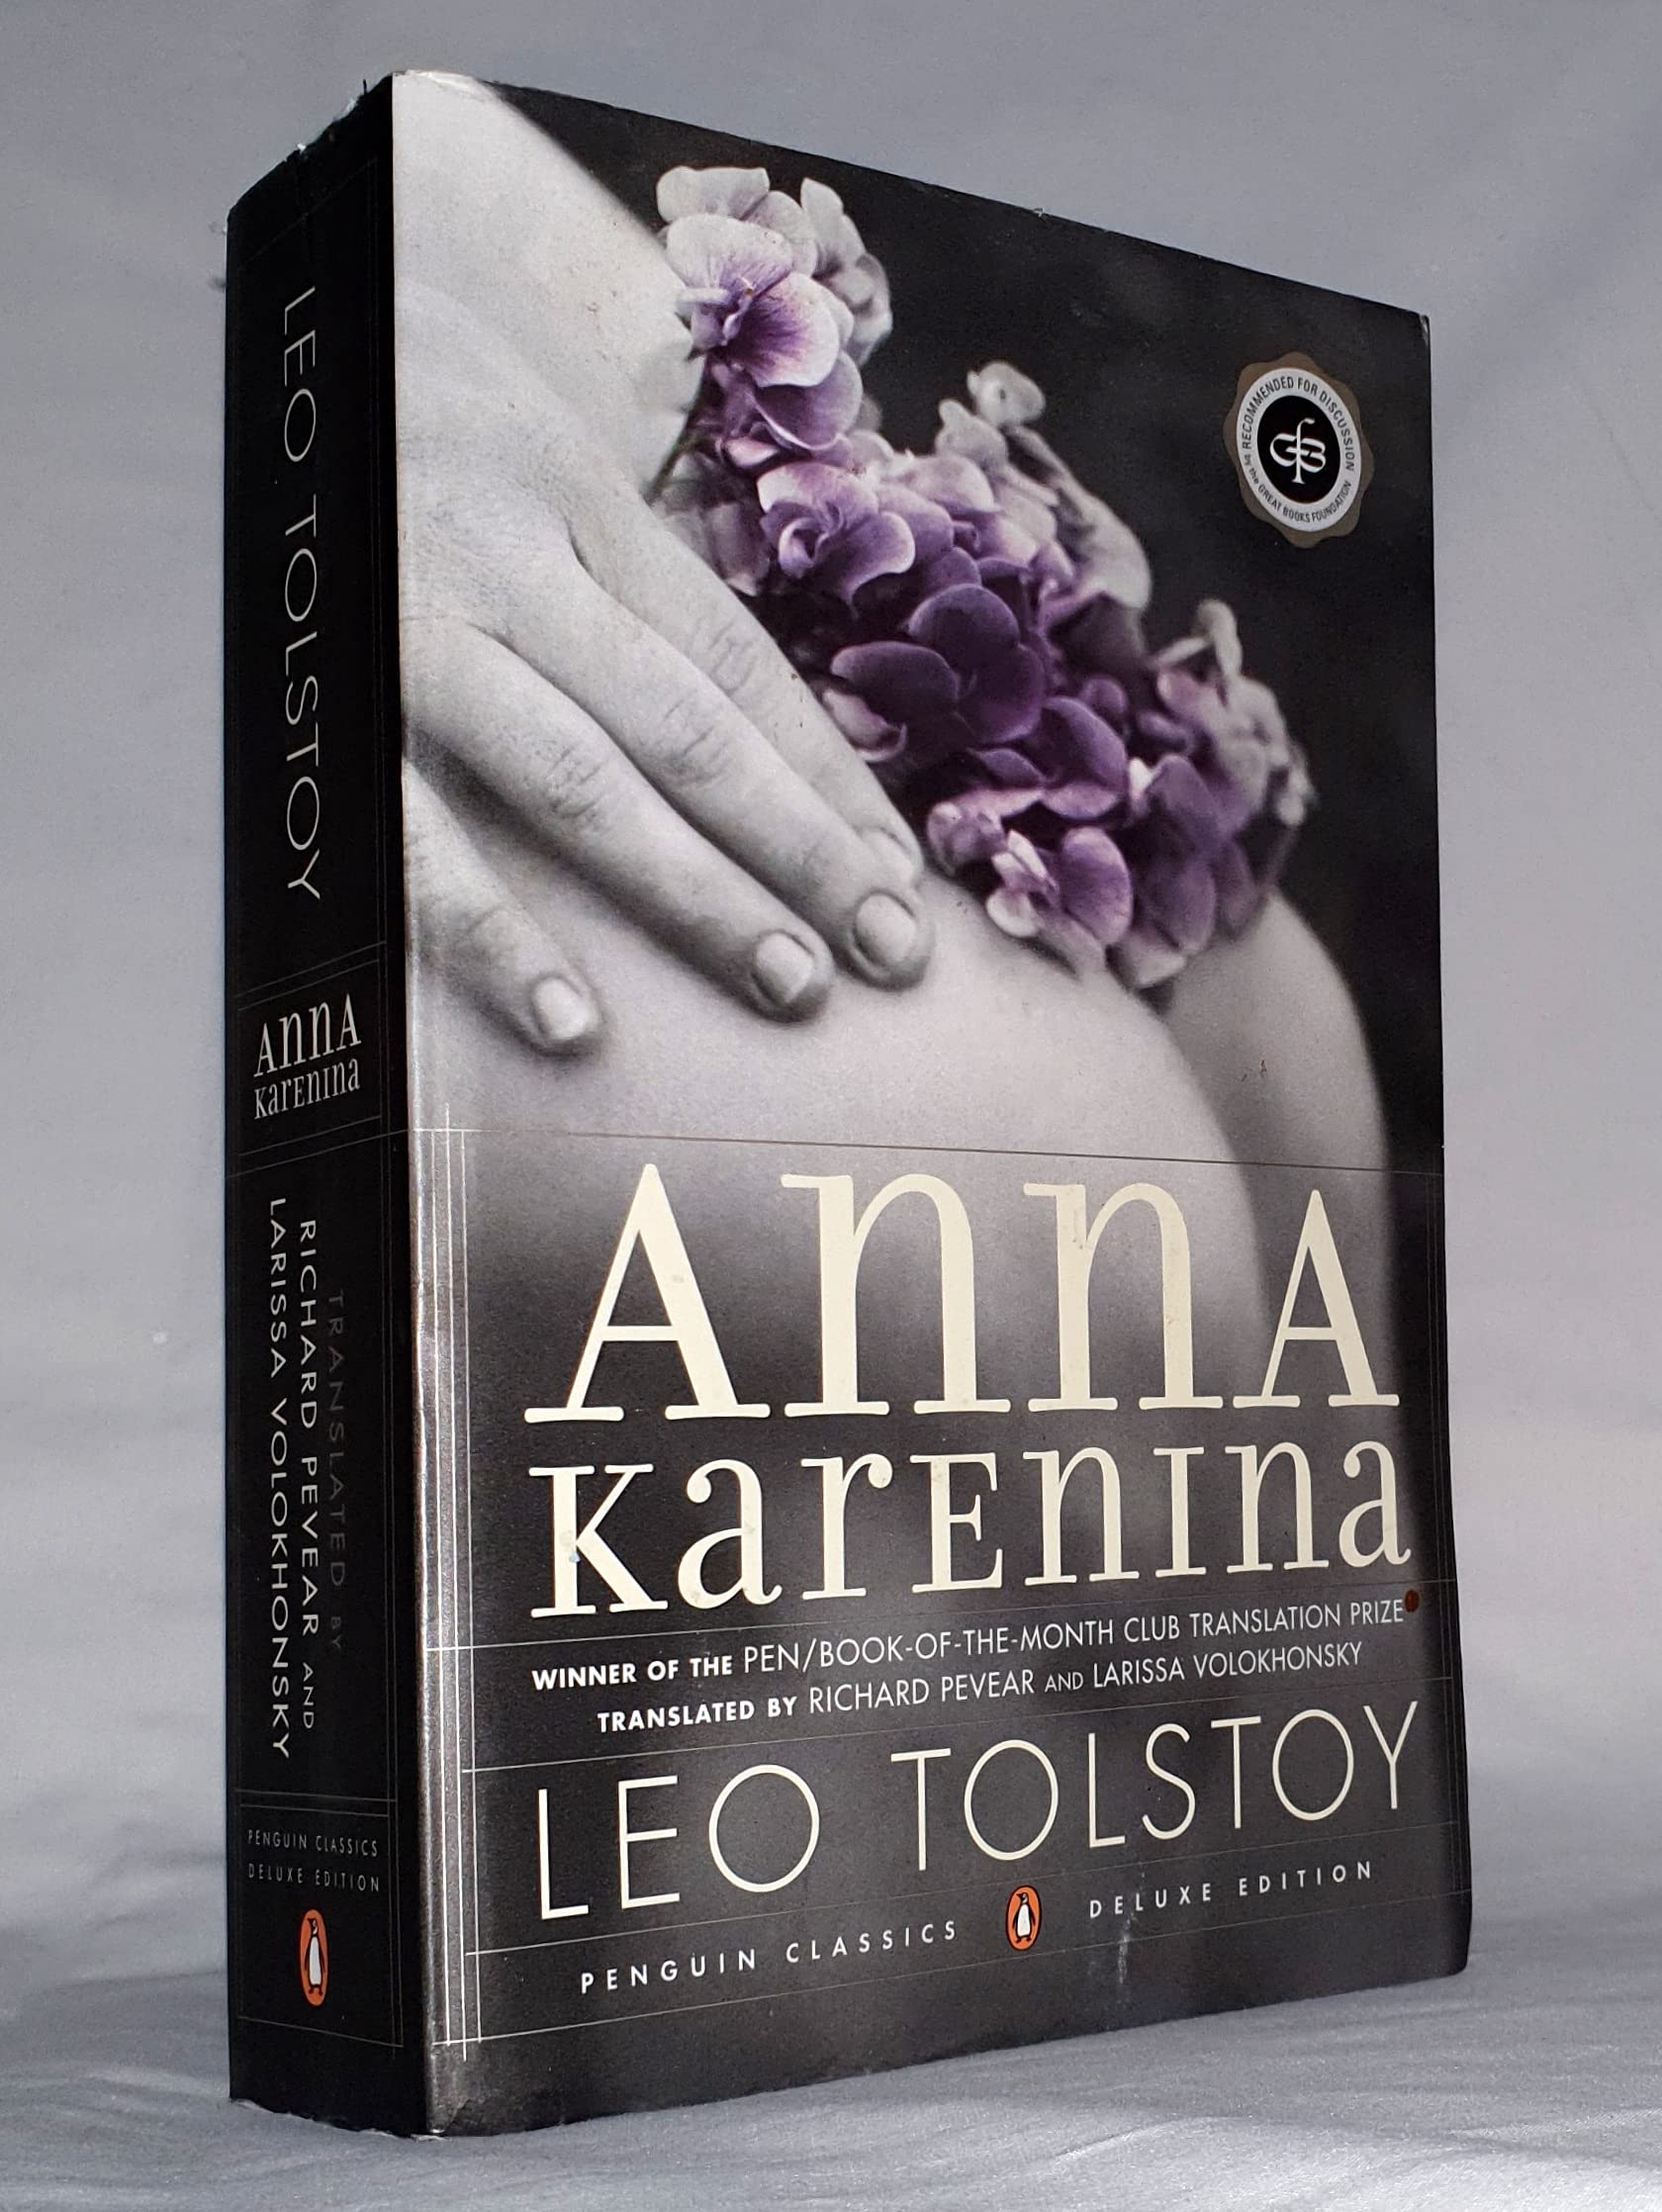 Anna Karenina (Oprah #5): (Penguin Classics Deluxe Edition)